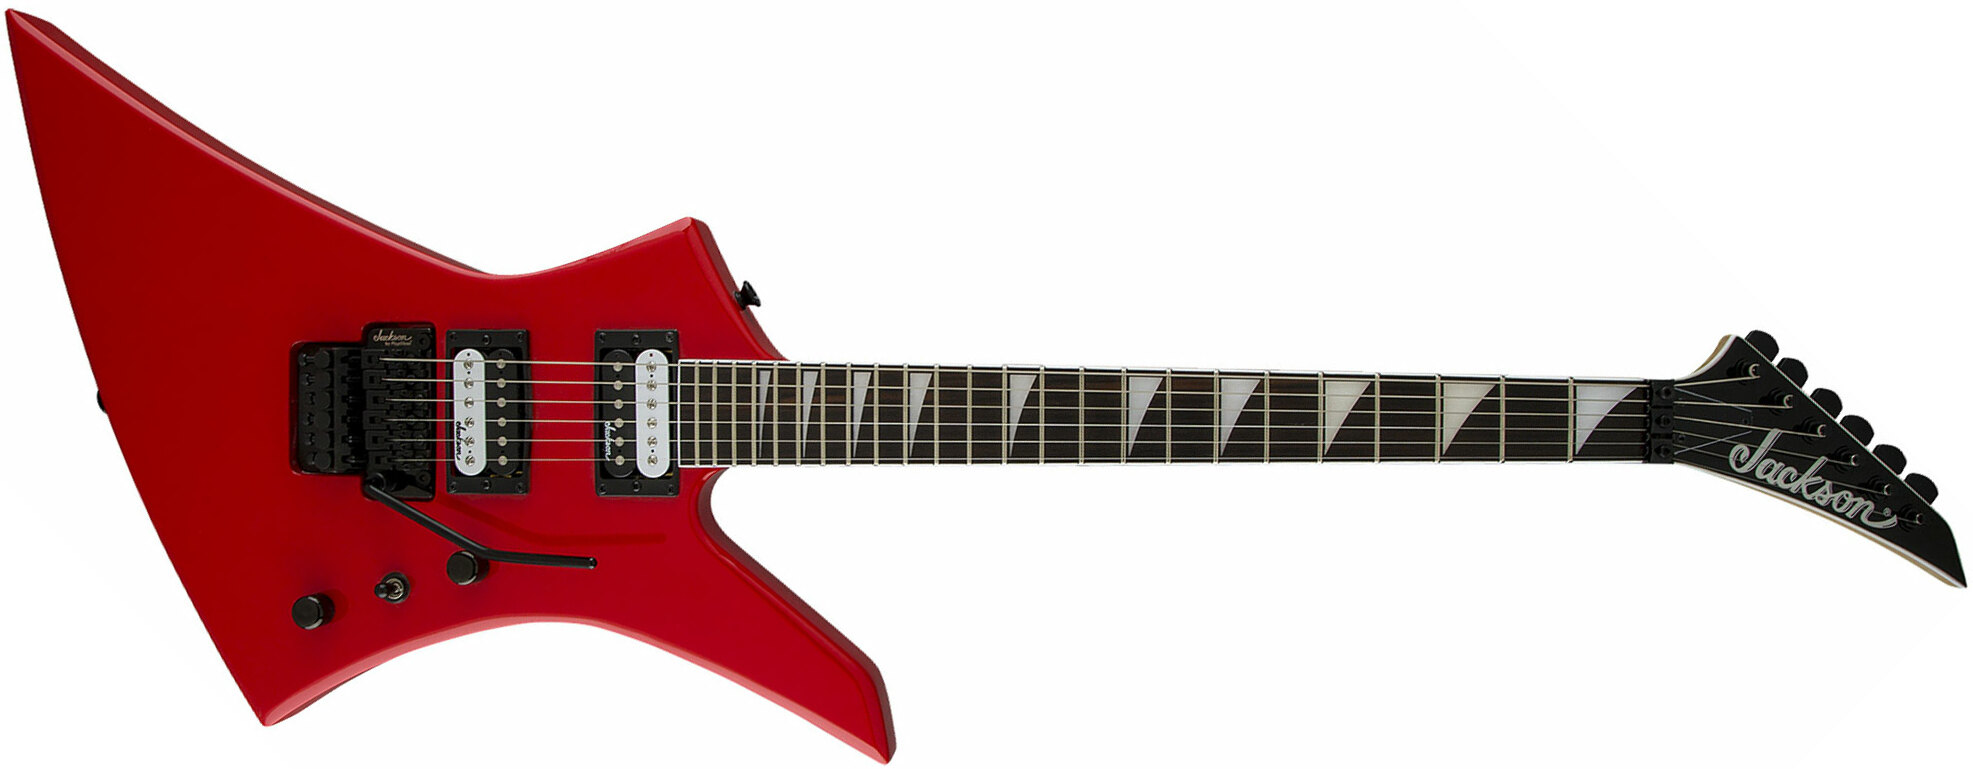 Jackson Kelly Js32 2h Fr Ama - Ferrari Red - Metalen elektrische gitaar - Main picture